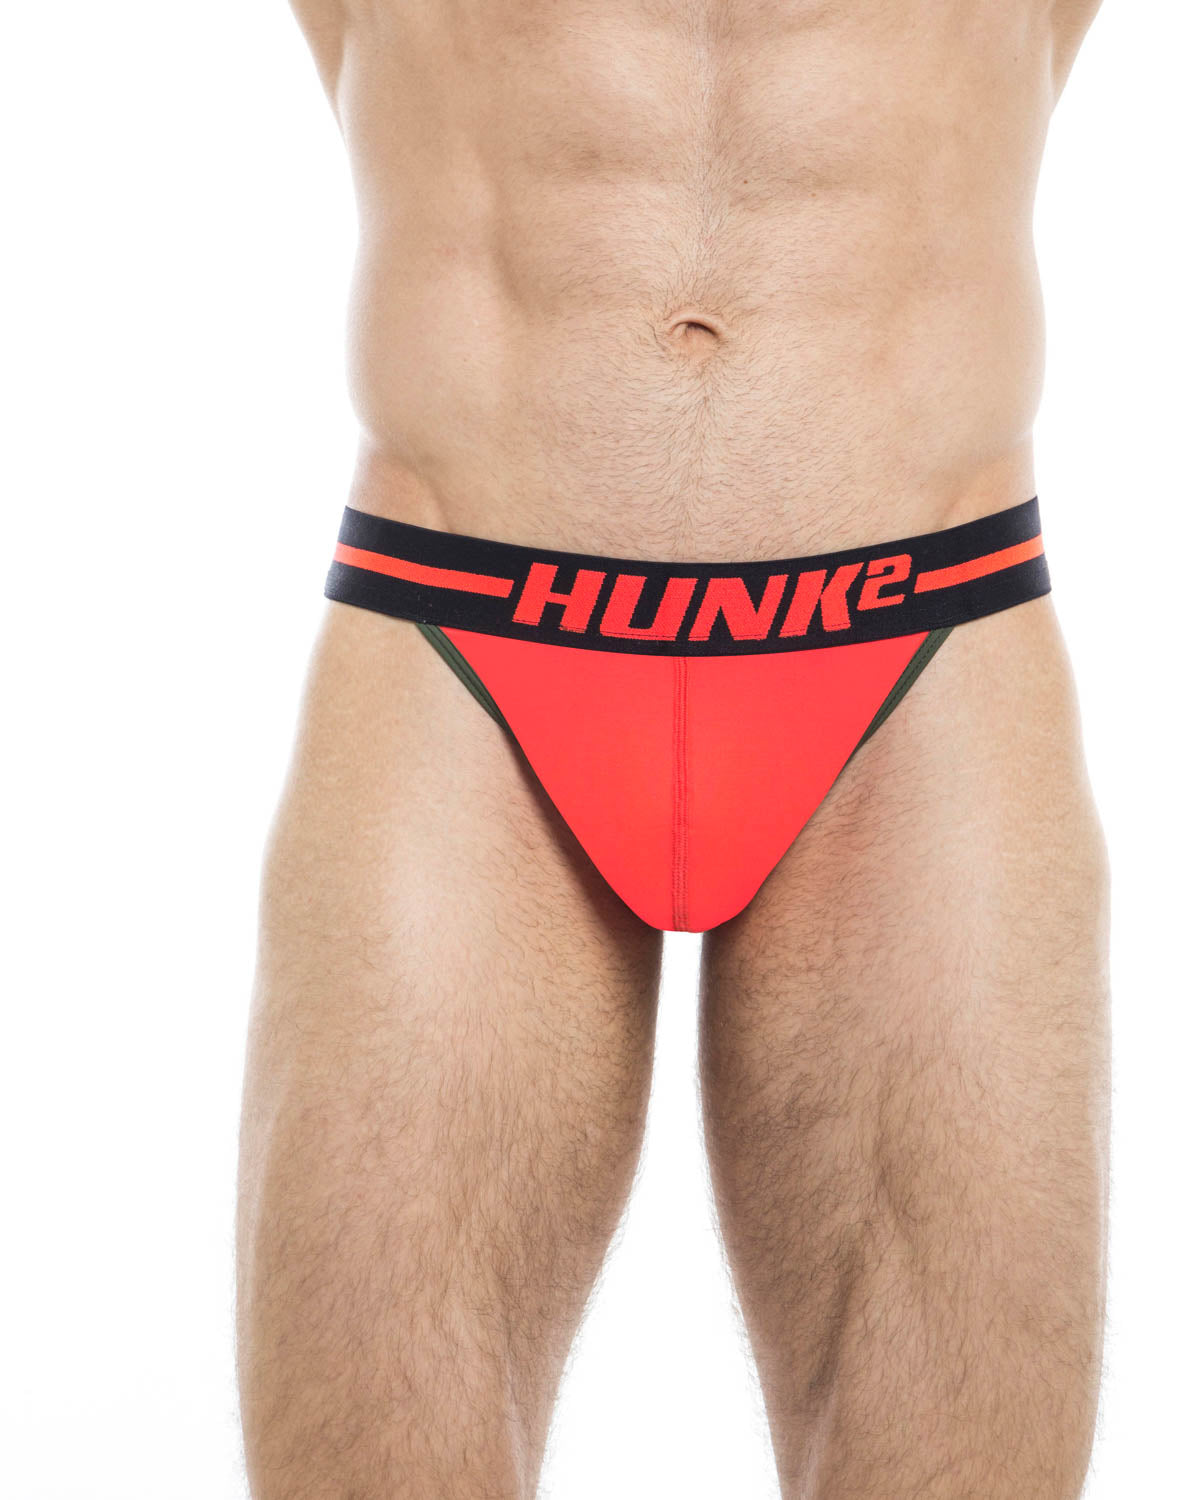 Men's thongs - HUNK2 Underwear Chaos Angreifen Thongs available at MensUnderwear.io - Image 1